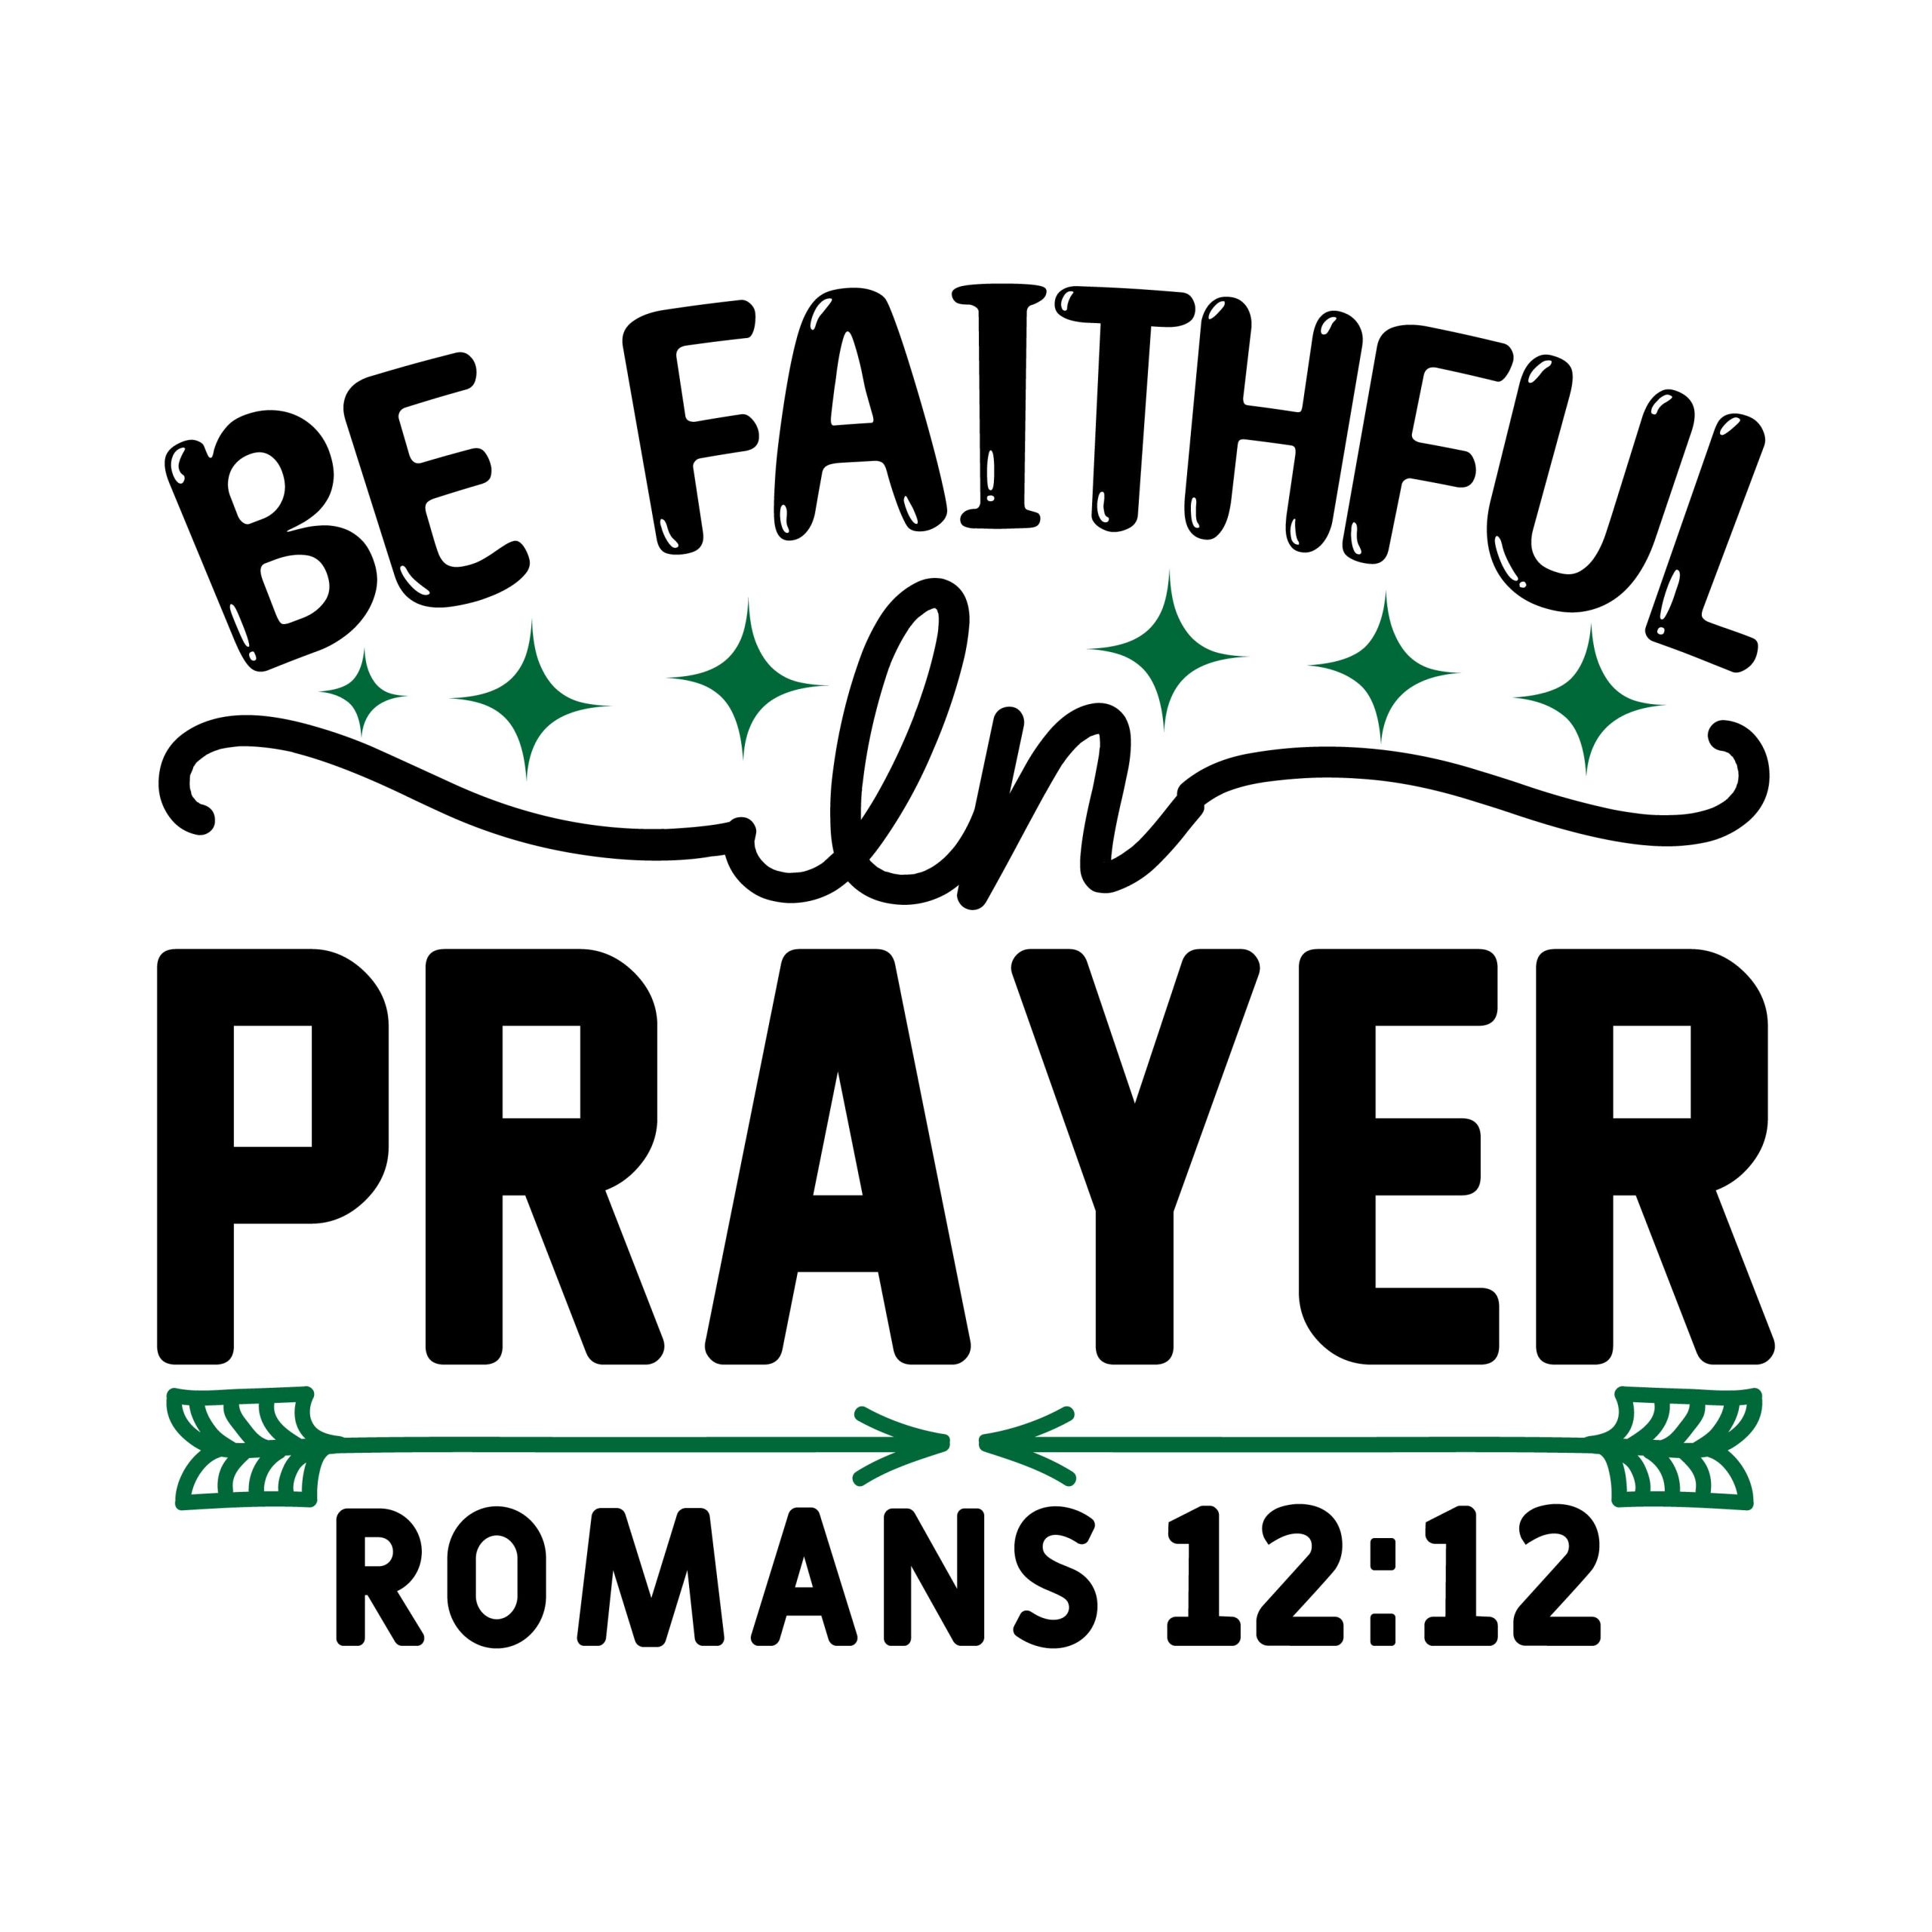 Be faithful in prayer romans 12:12, bible verses, scripture verses, svg files, passages, sayings, cricut designs, silhouette, embroidery, bundle, free cut files, design space, vector